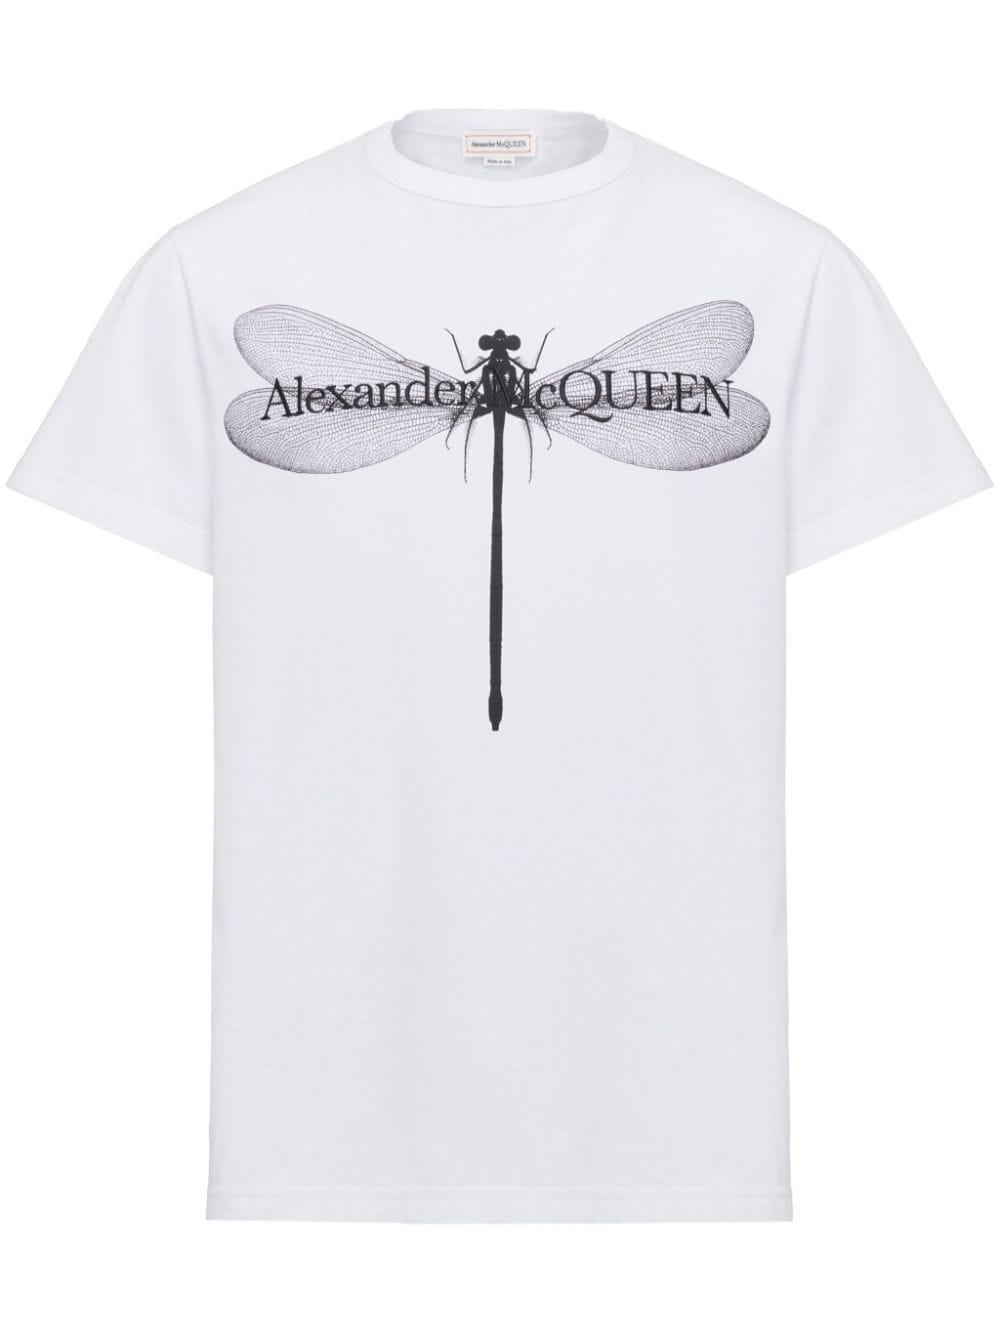 T-shirt in cotone con stampa libellule<br><br><br>